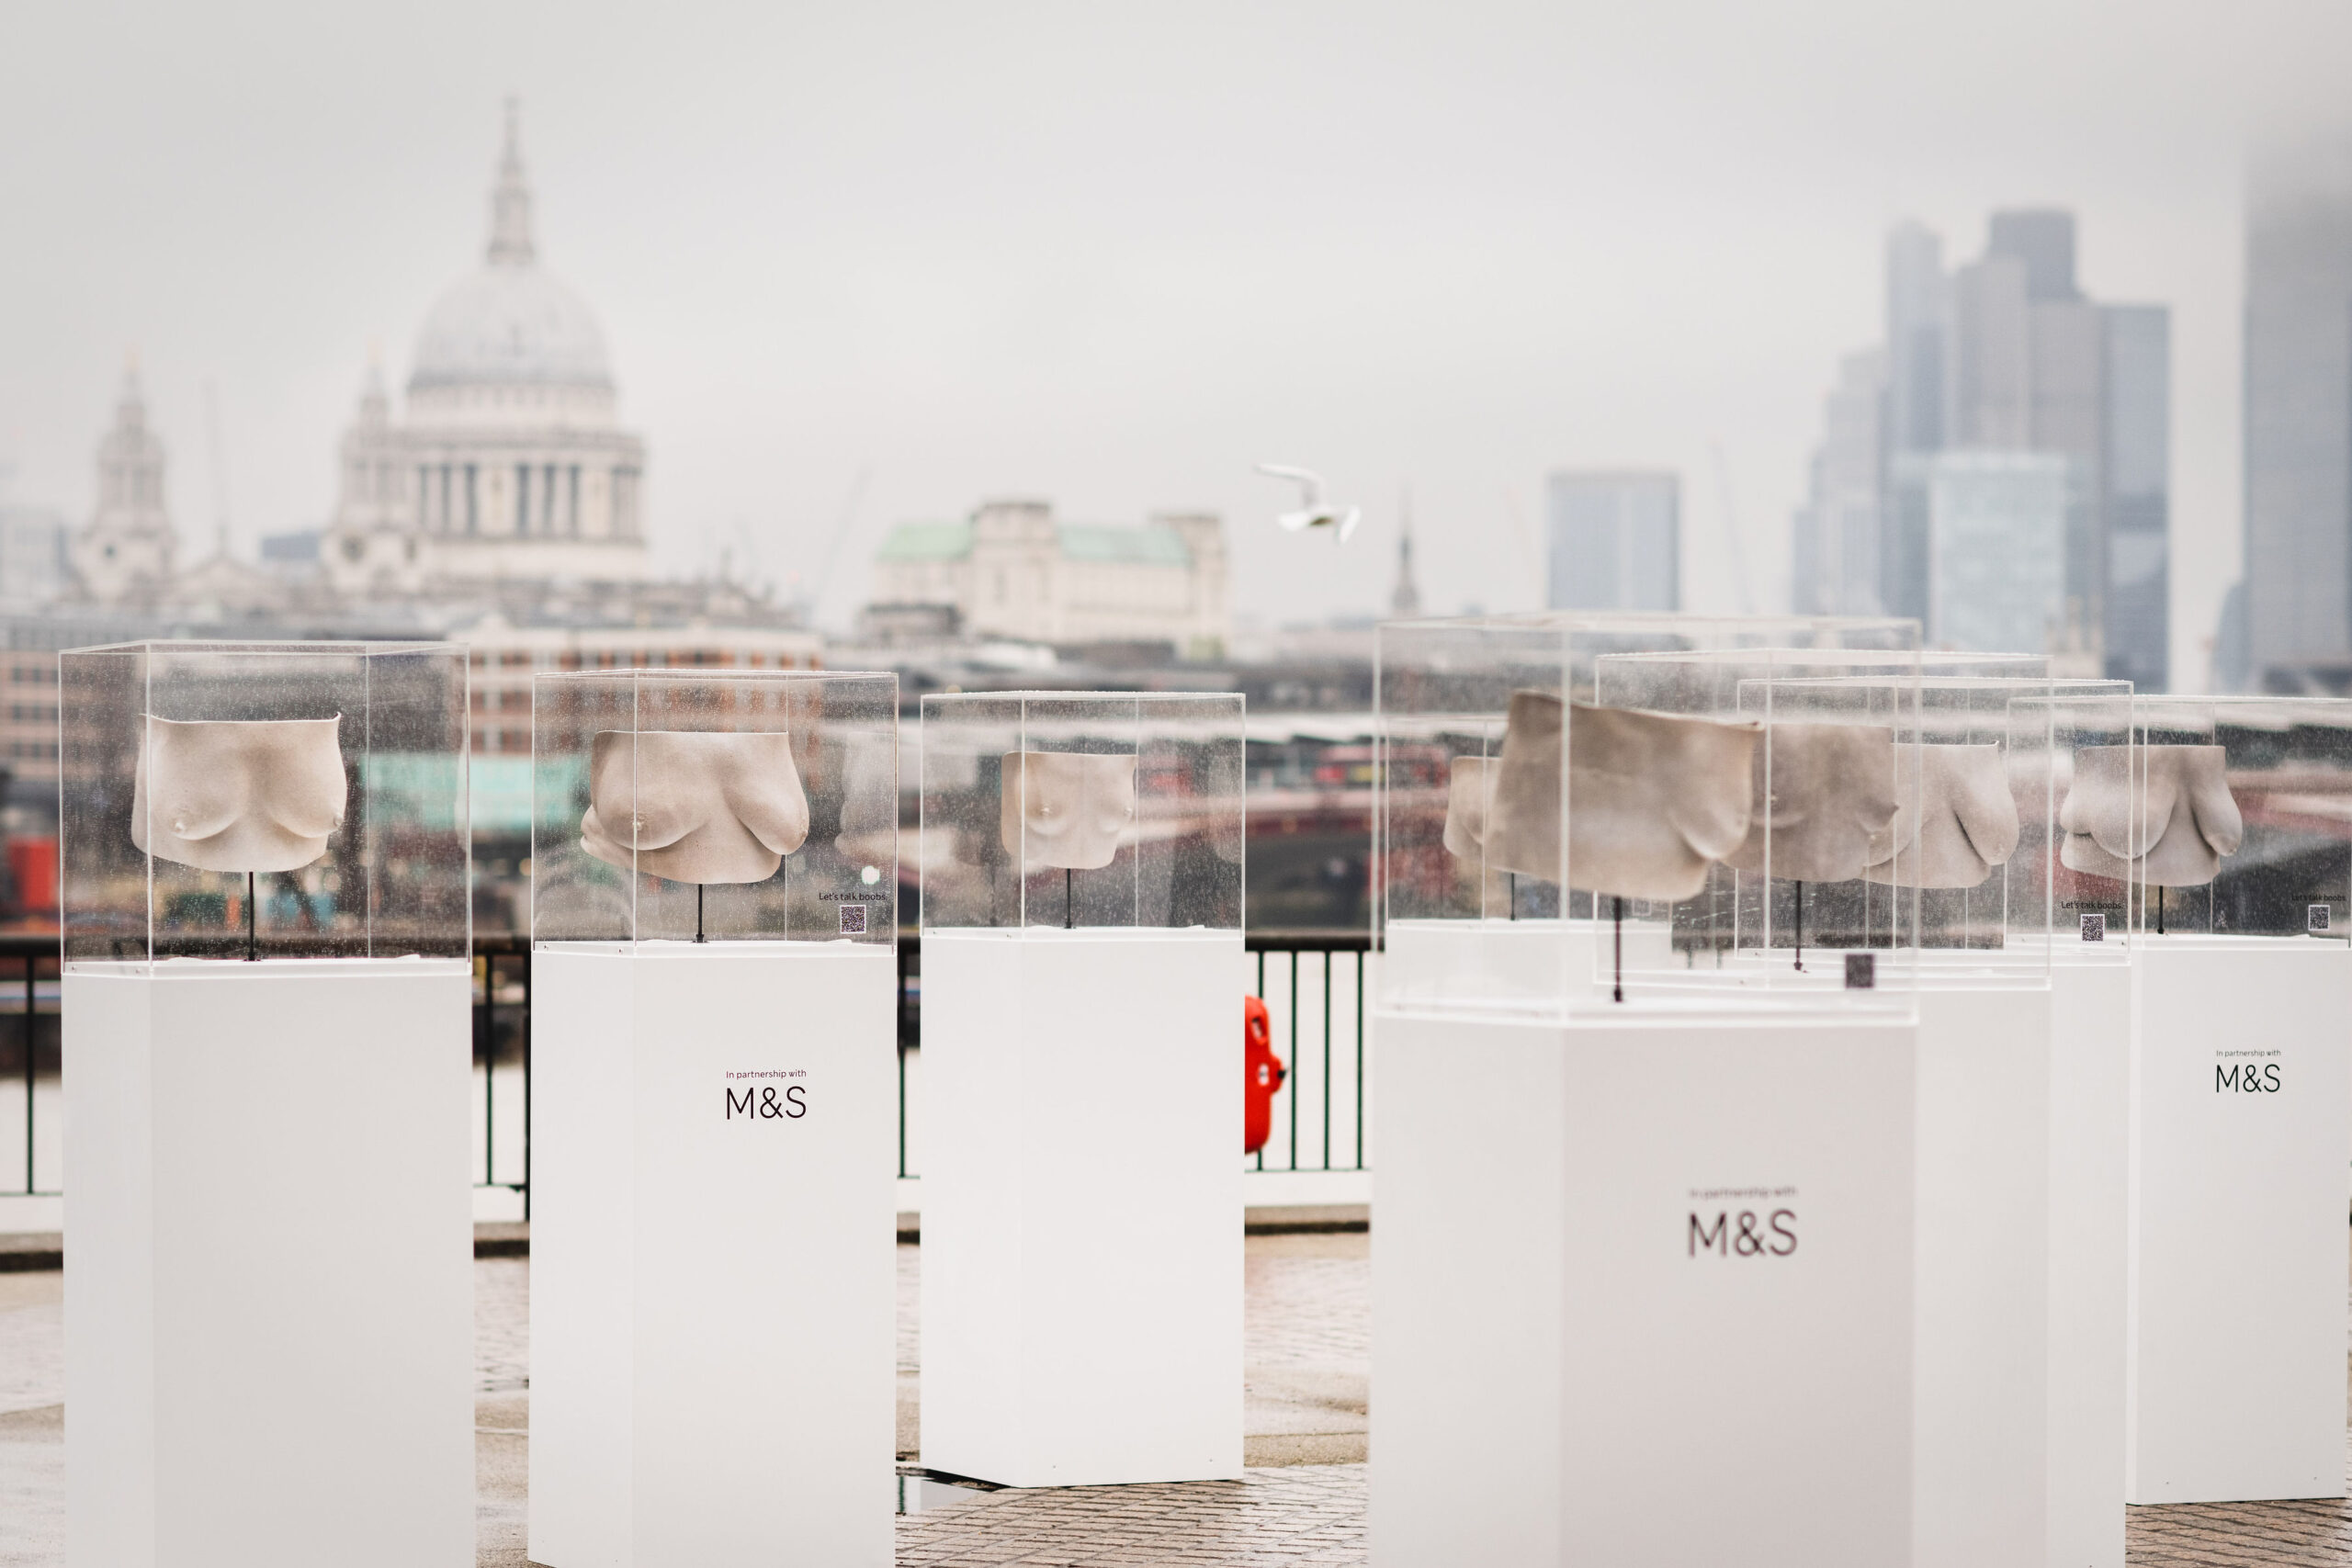 M&S art installation “Sixteen” celebrates diversity and encourages